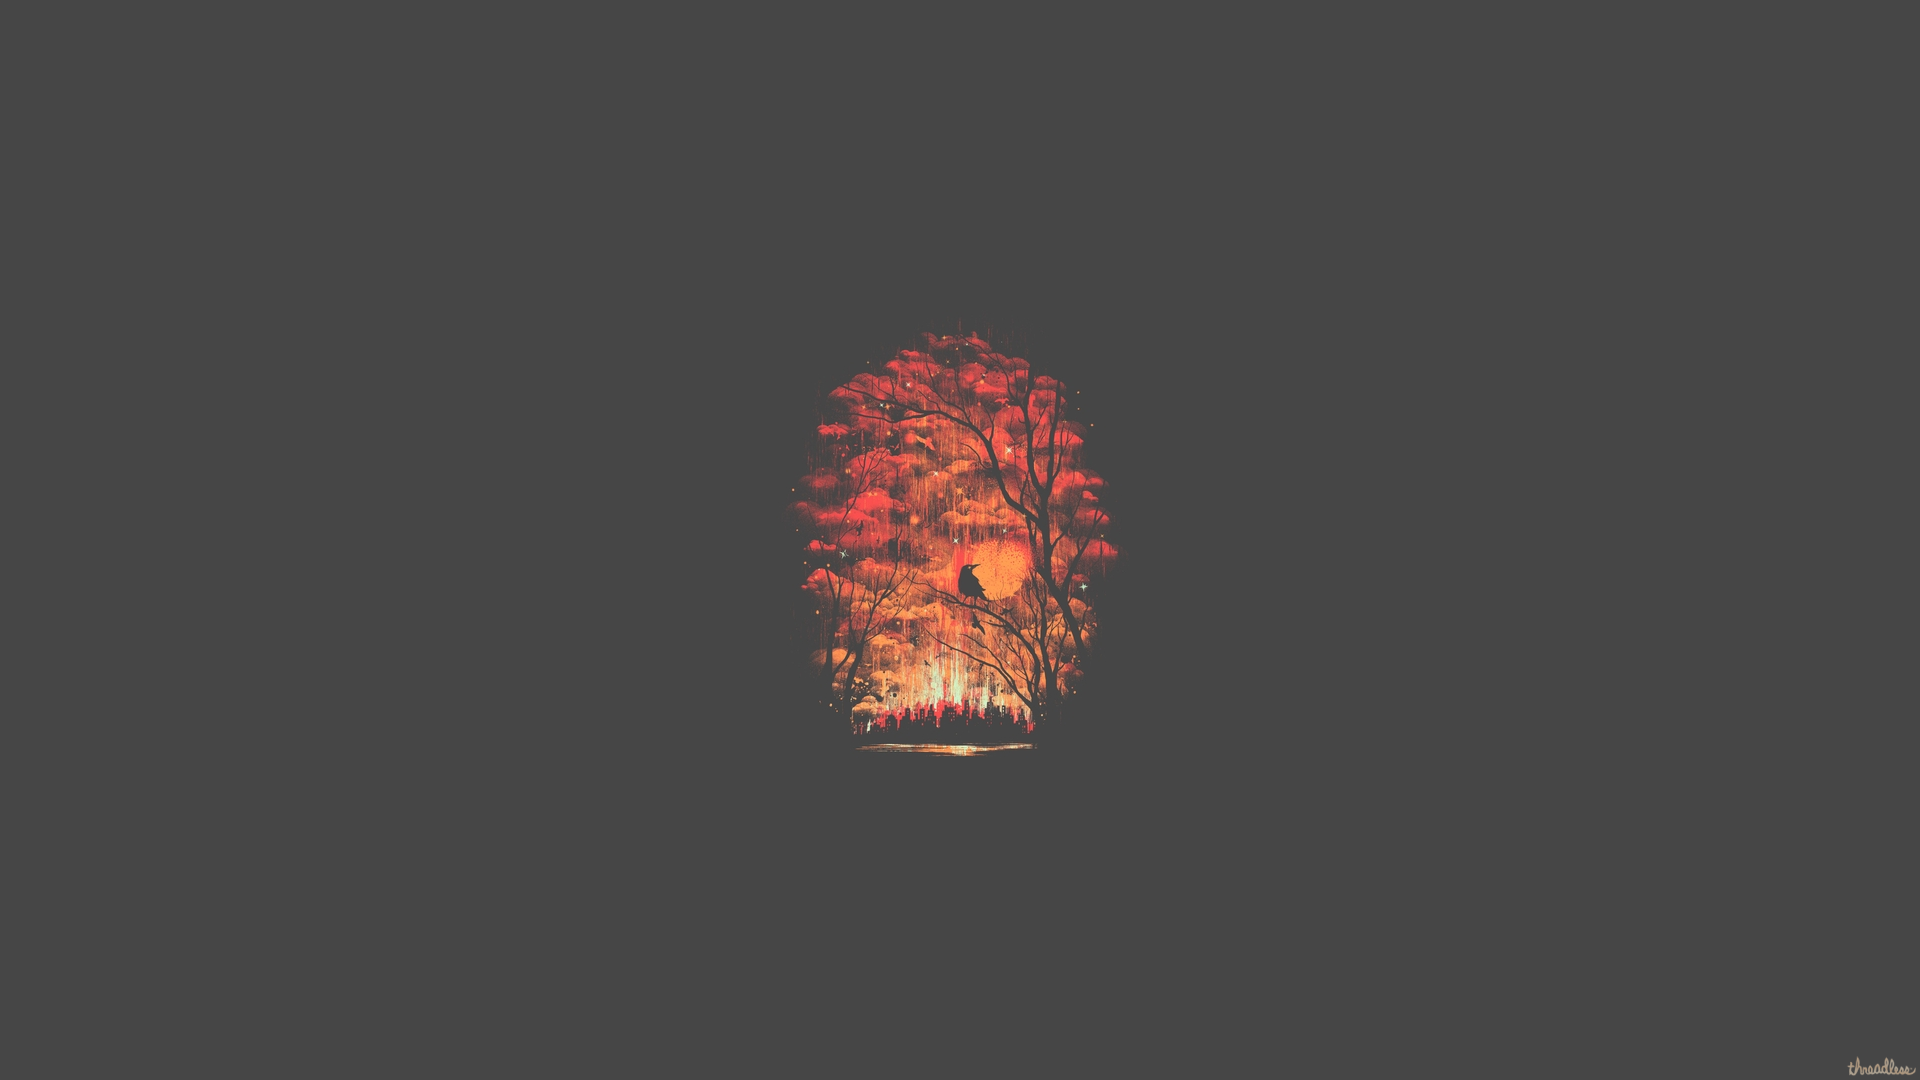 Forest Minimalist, HD Artist, 4k Wallpaper, Image, Background